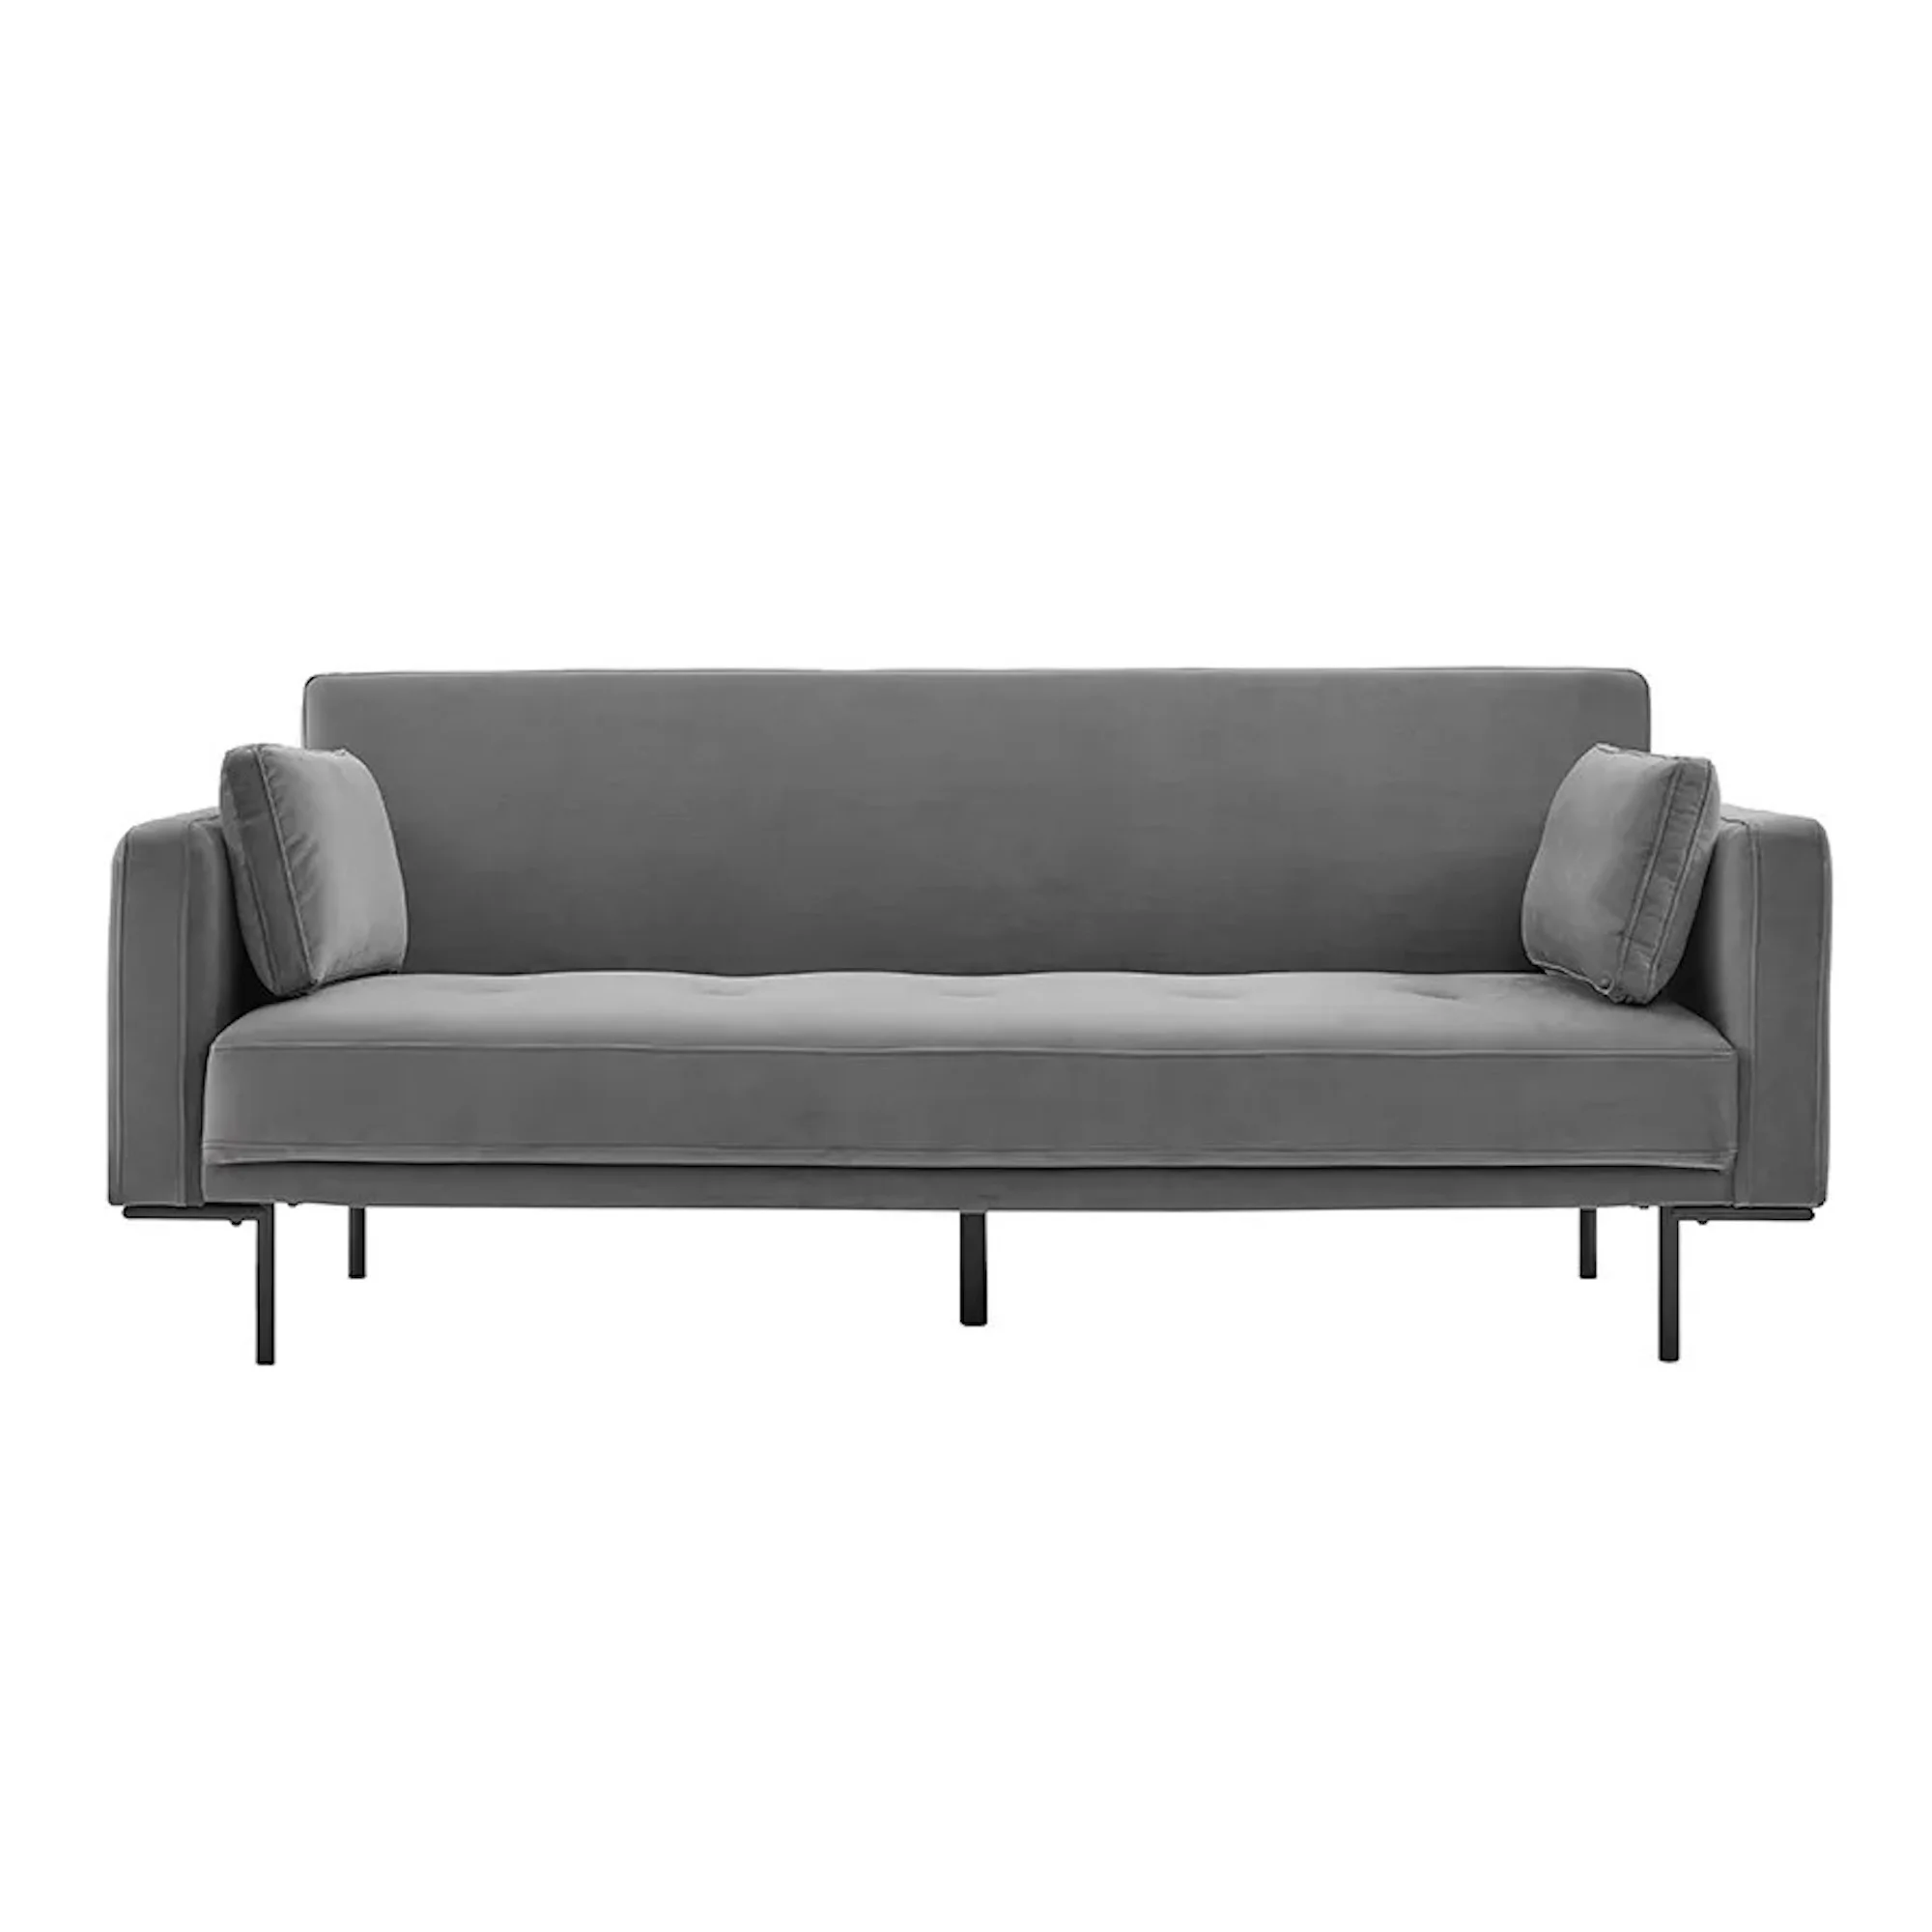 Dusk + Hudson Three-Seater Click Clack Sofa Bed